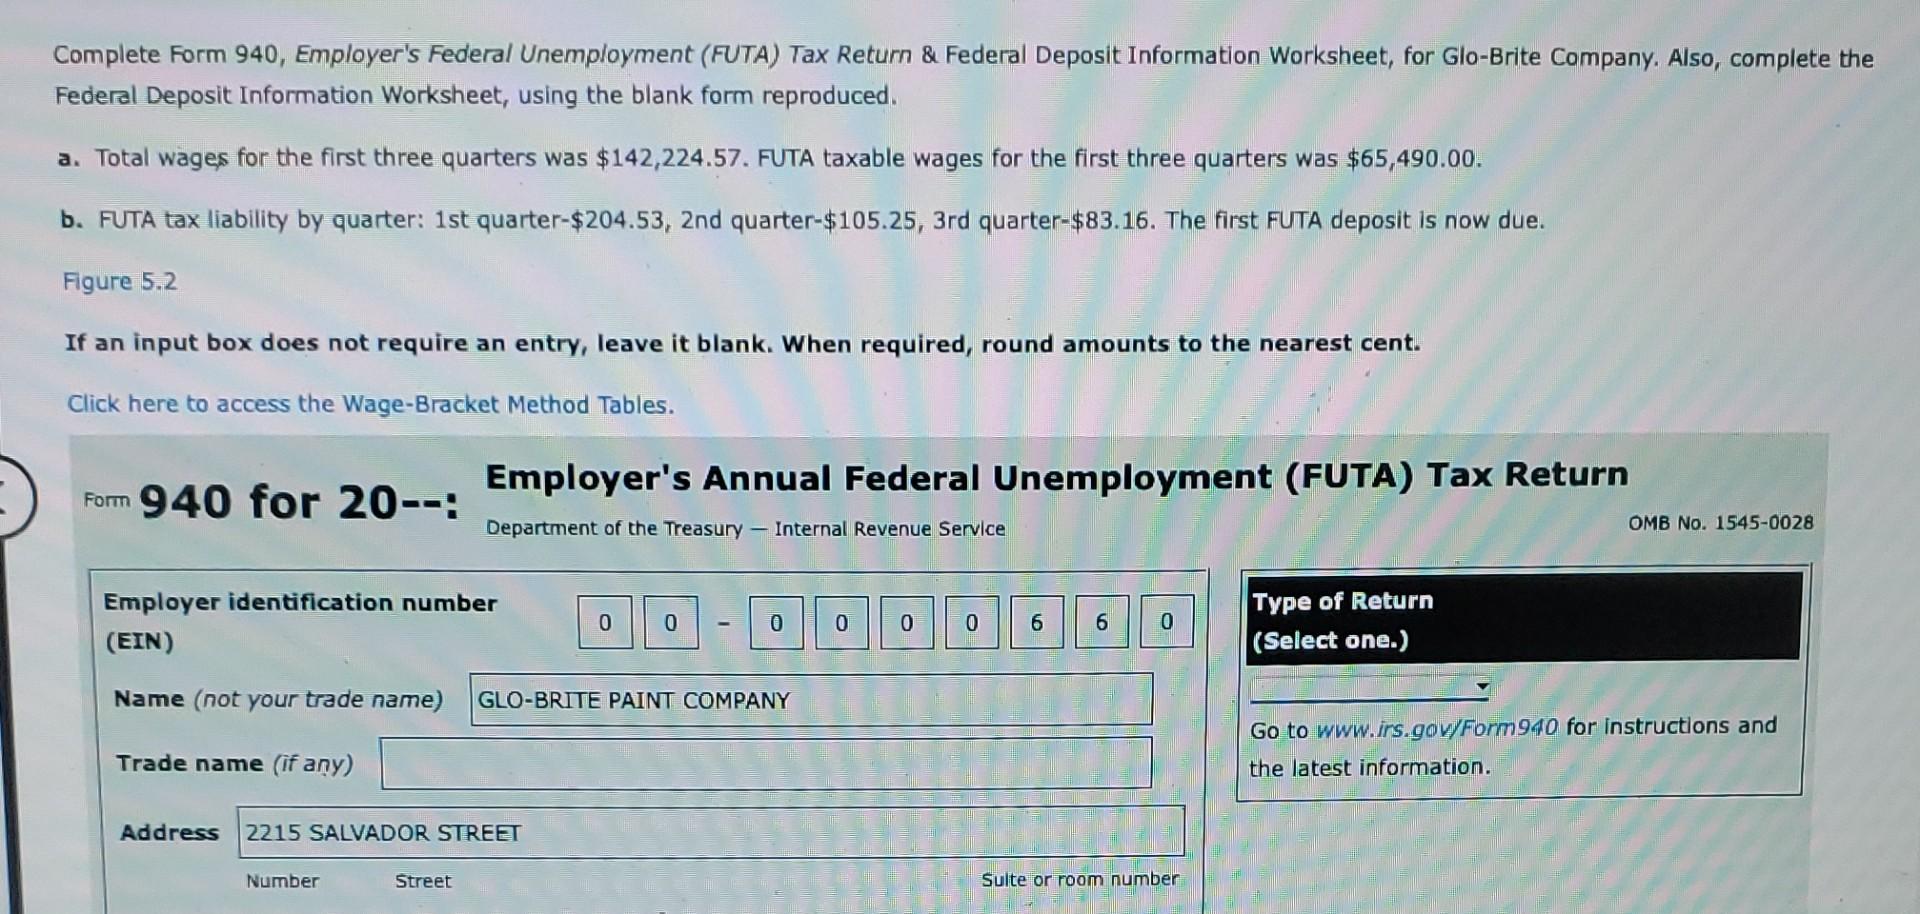 Complete Form 940, Employer's Federal Unemployment (FUTA) Tax Return & Federal Deposit Information Worksheet,